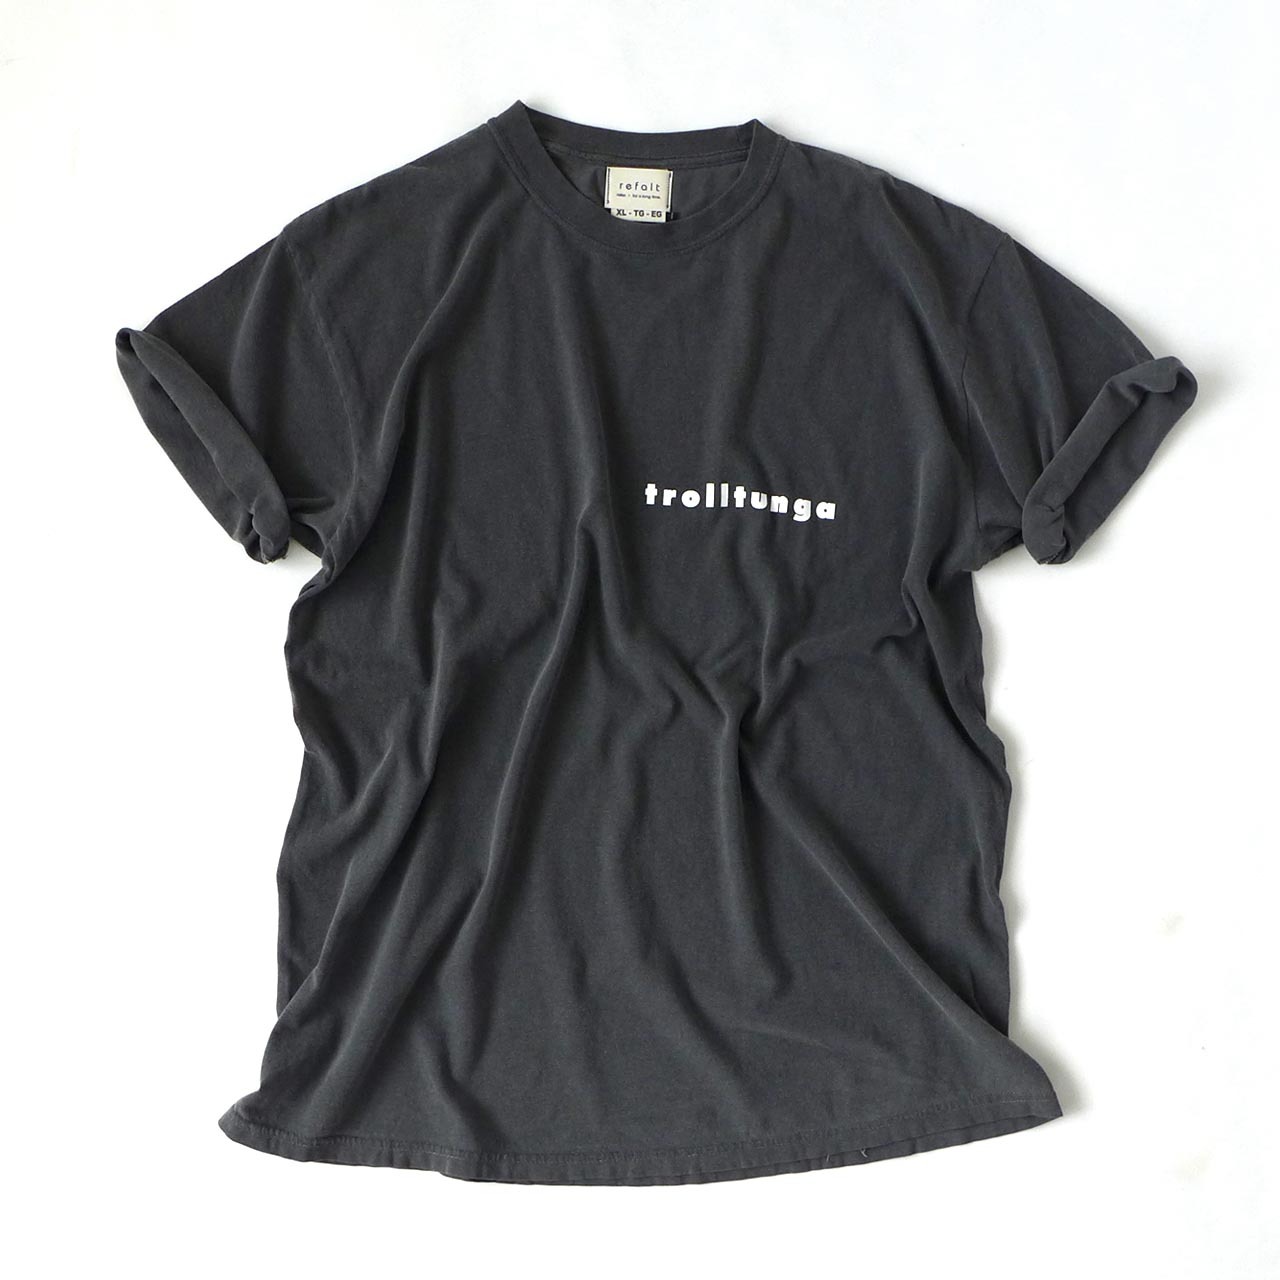 refalt original wear [リファルト オリジナルウエア] ヴィンテージ風ビッグTシャツ「trolltunga tee」 [tee-Tro1101] _f0051306_10115245.jpg